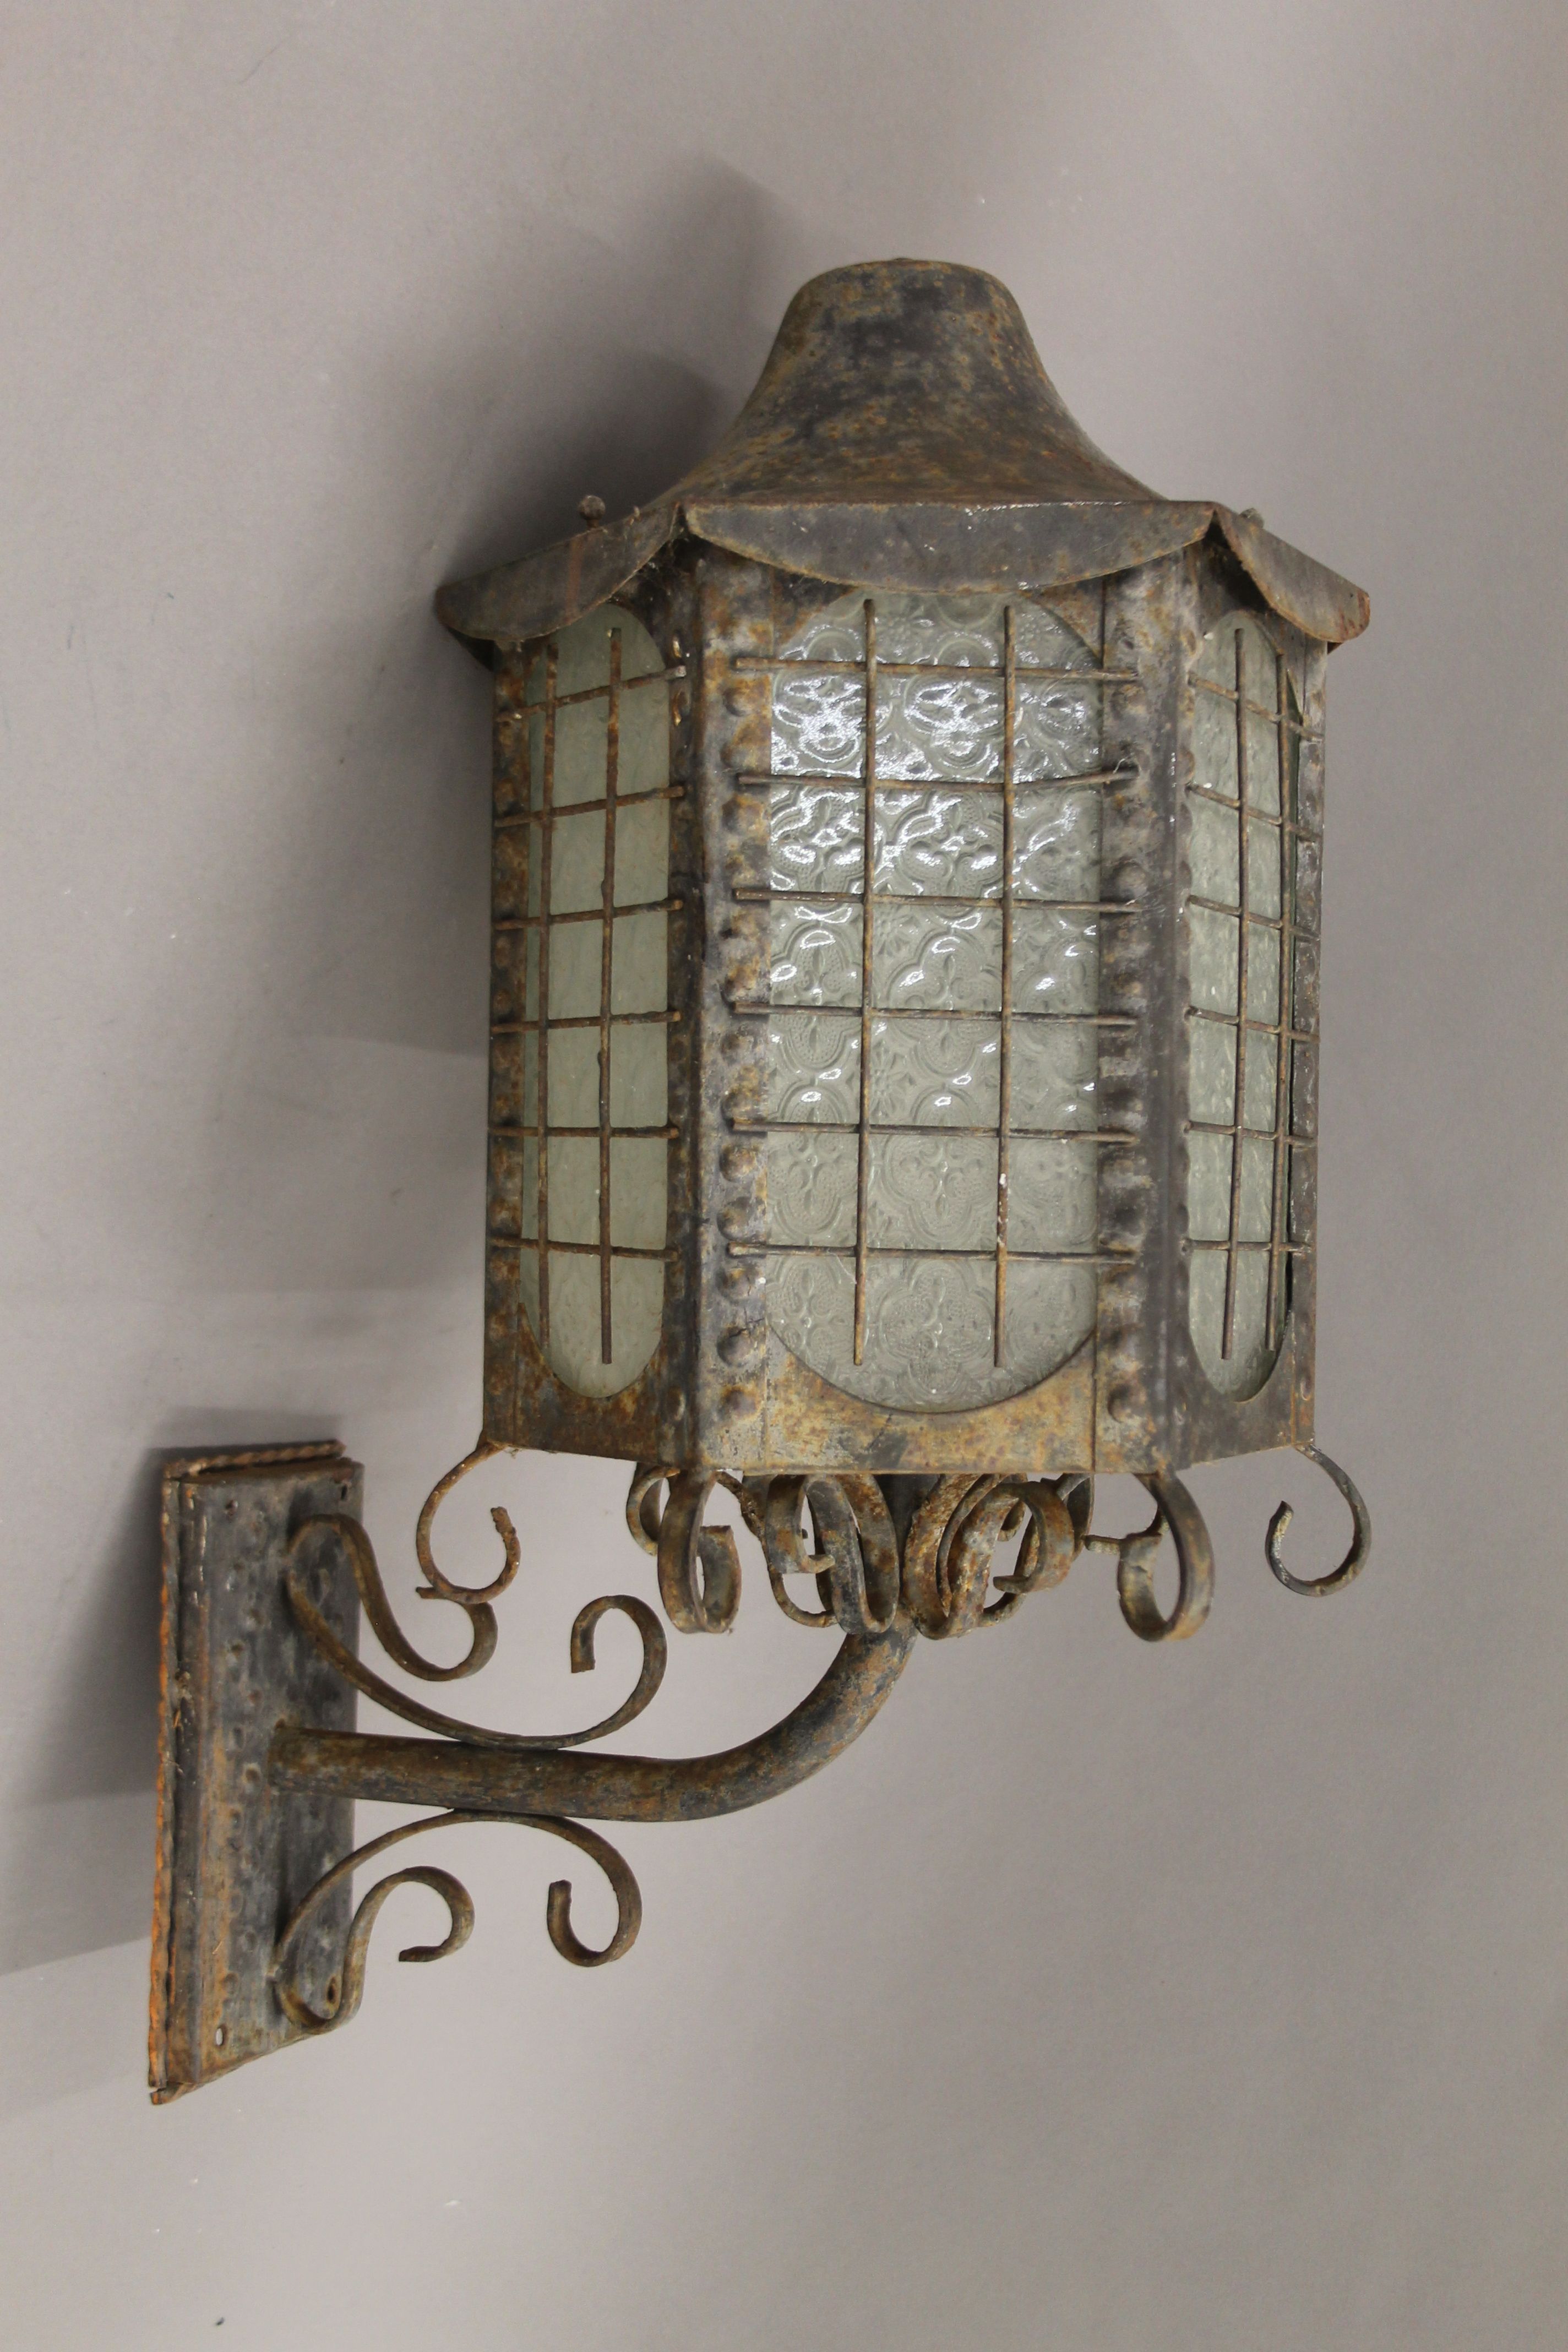 A wrought iron hanging lantern. 55 cm high.